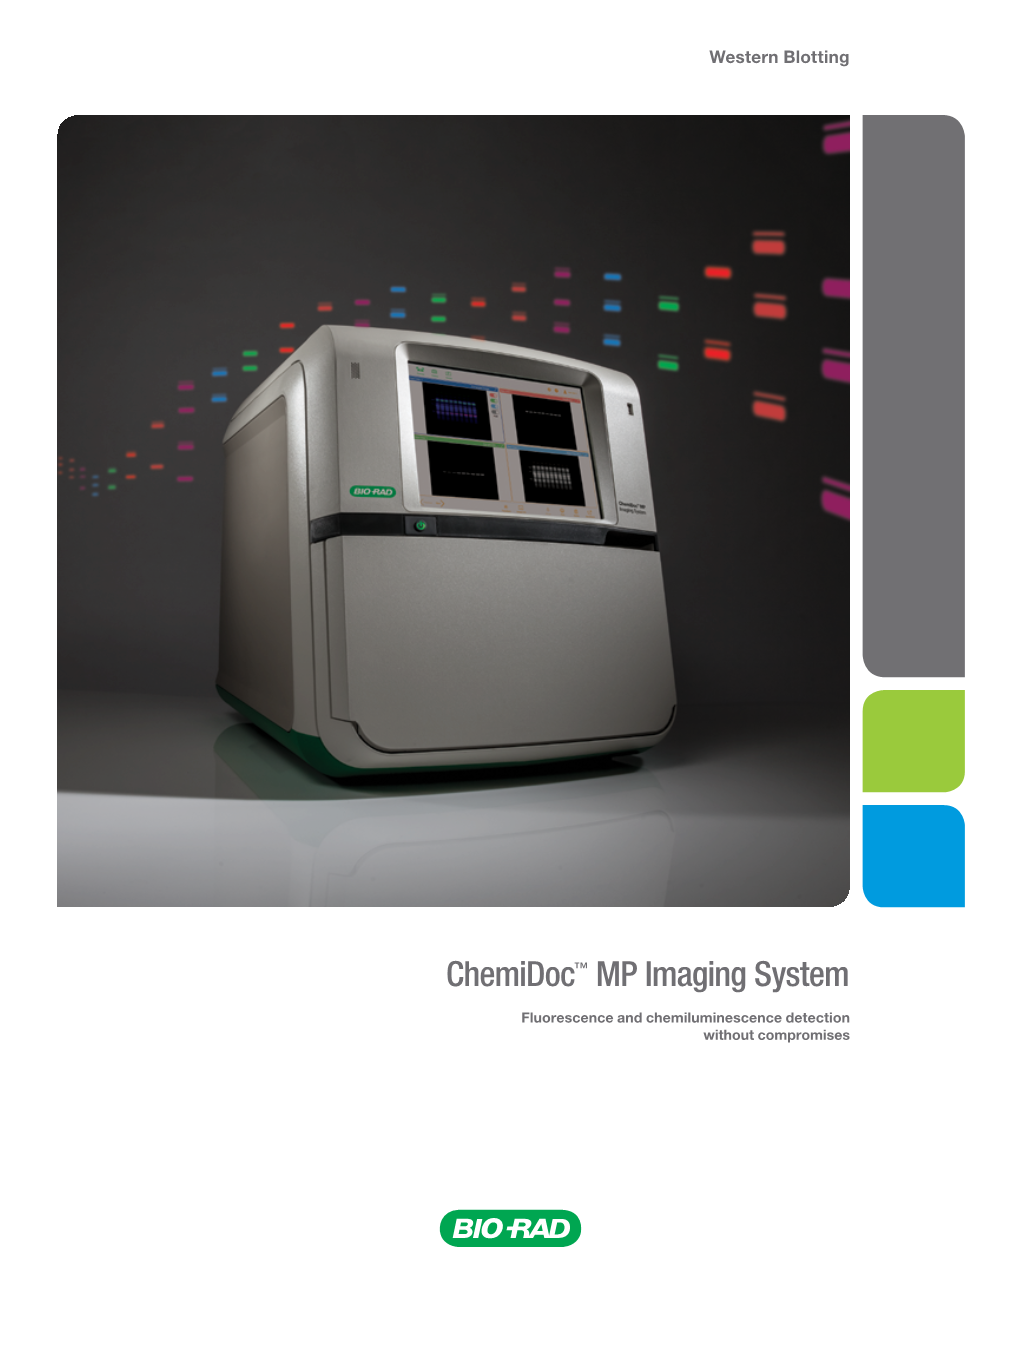 Chemidoc™ MP Imaging System